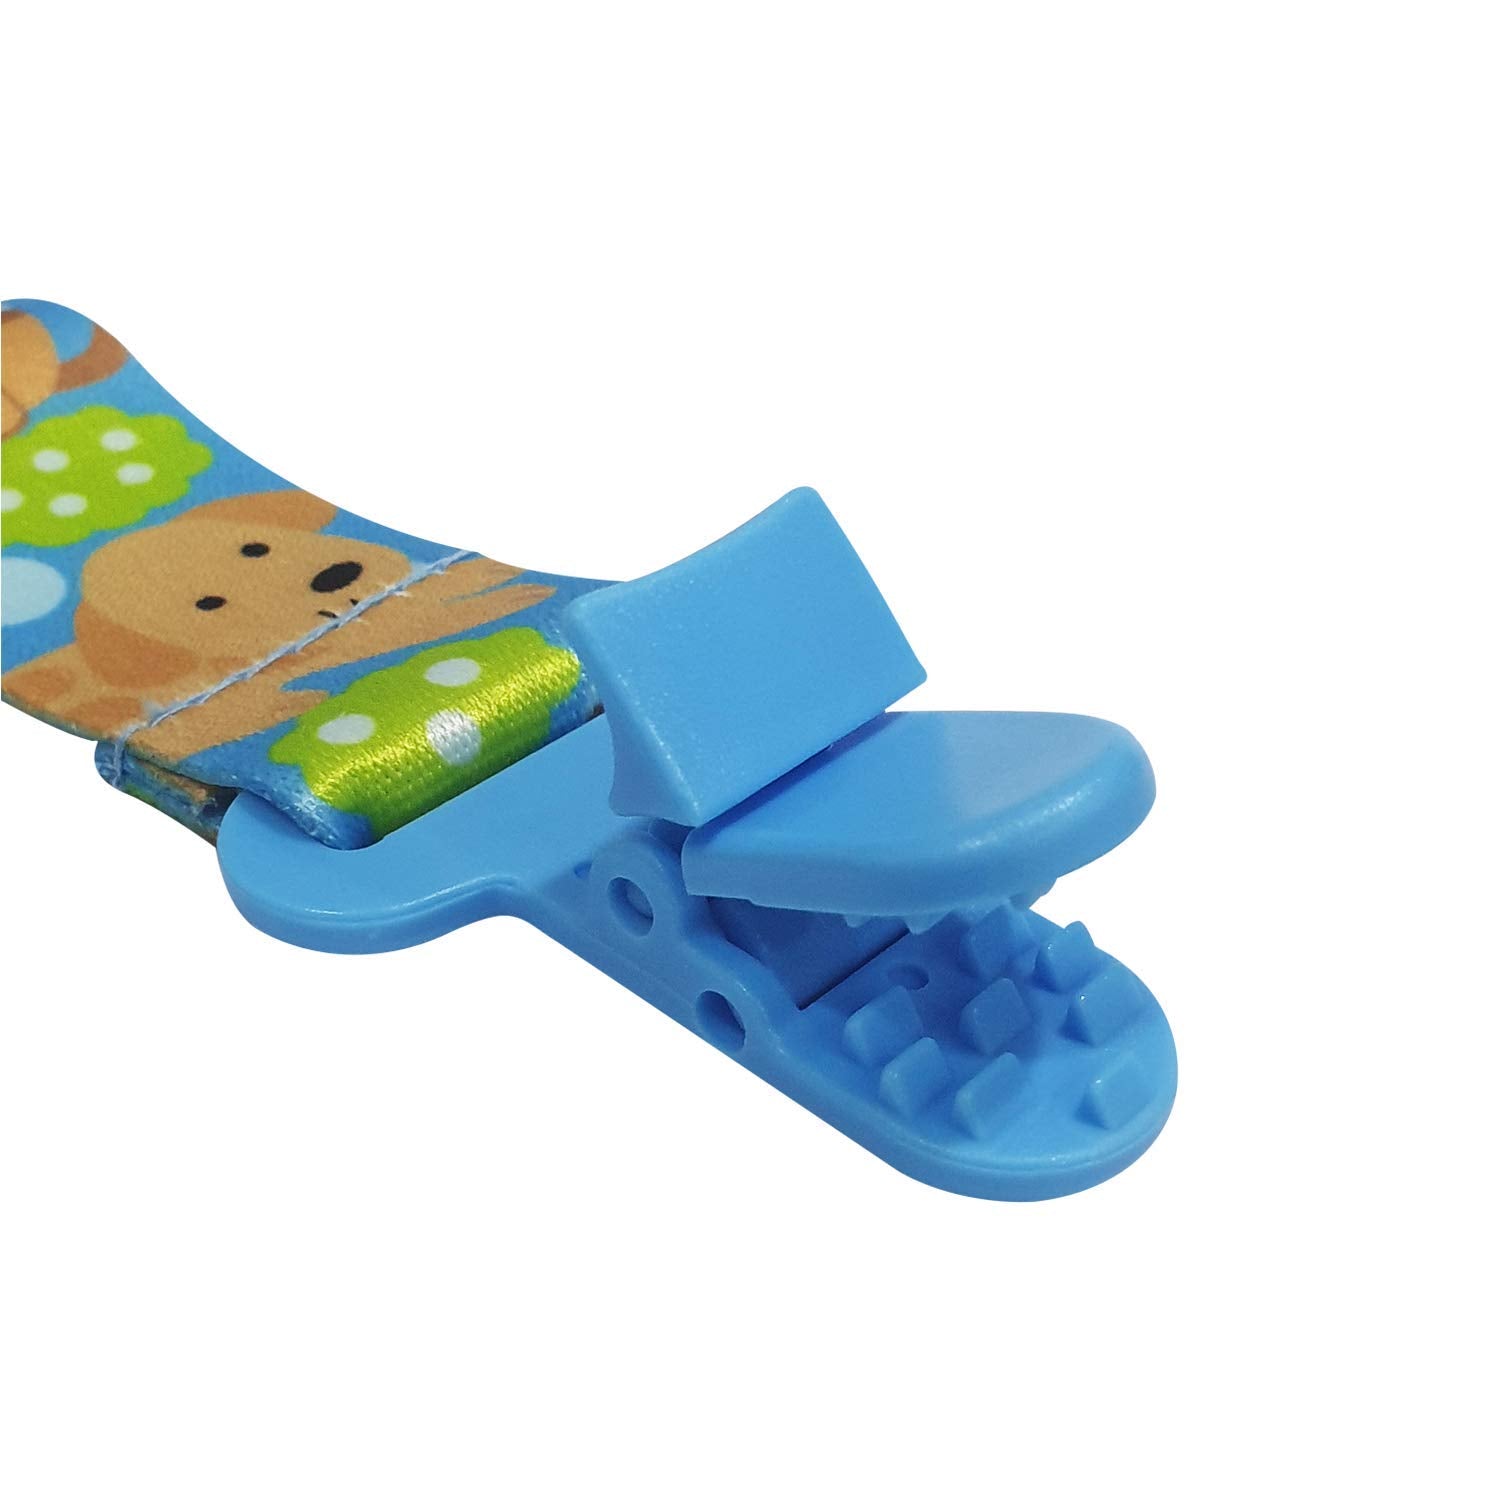 Hopop Baby Pacifier Clip For Babies- Blue, 0m+